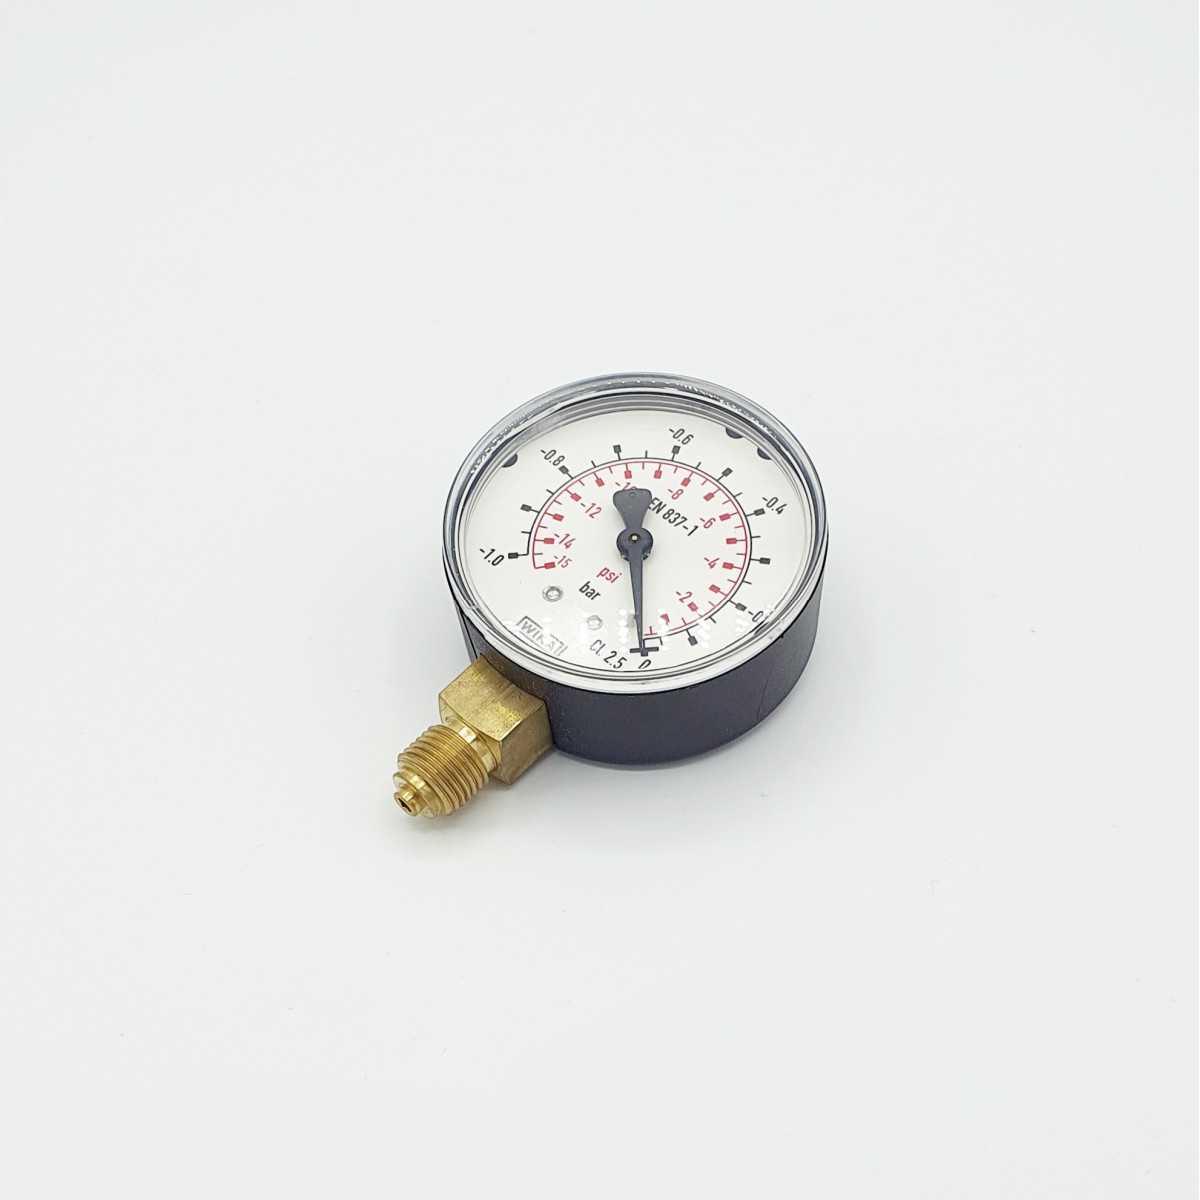 Vacuum gauge DM40 G 1/8" U | Beta Online Shop